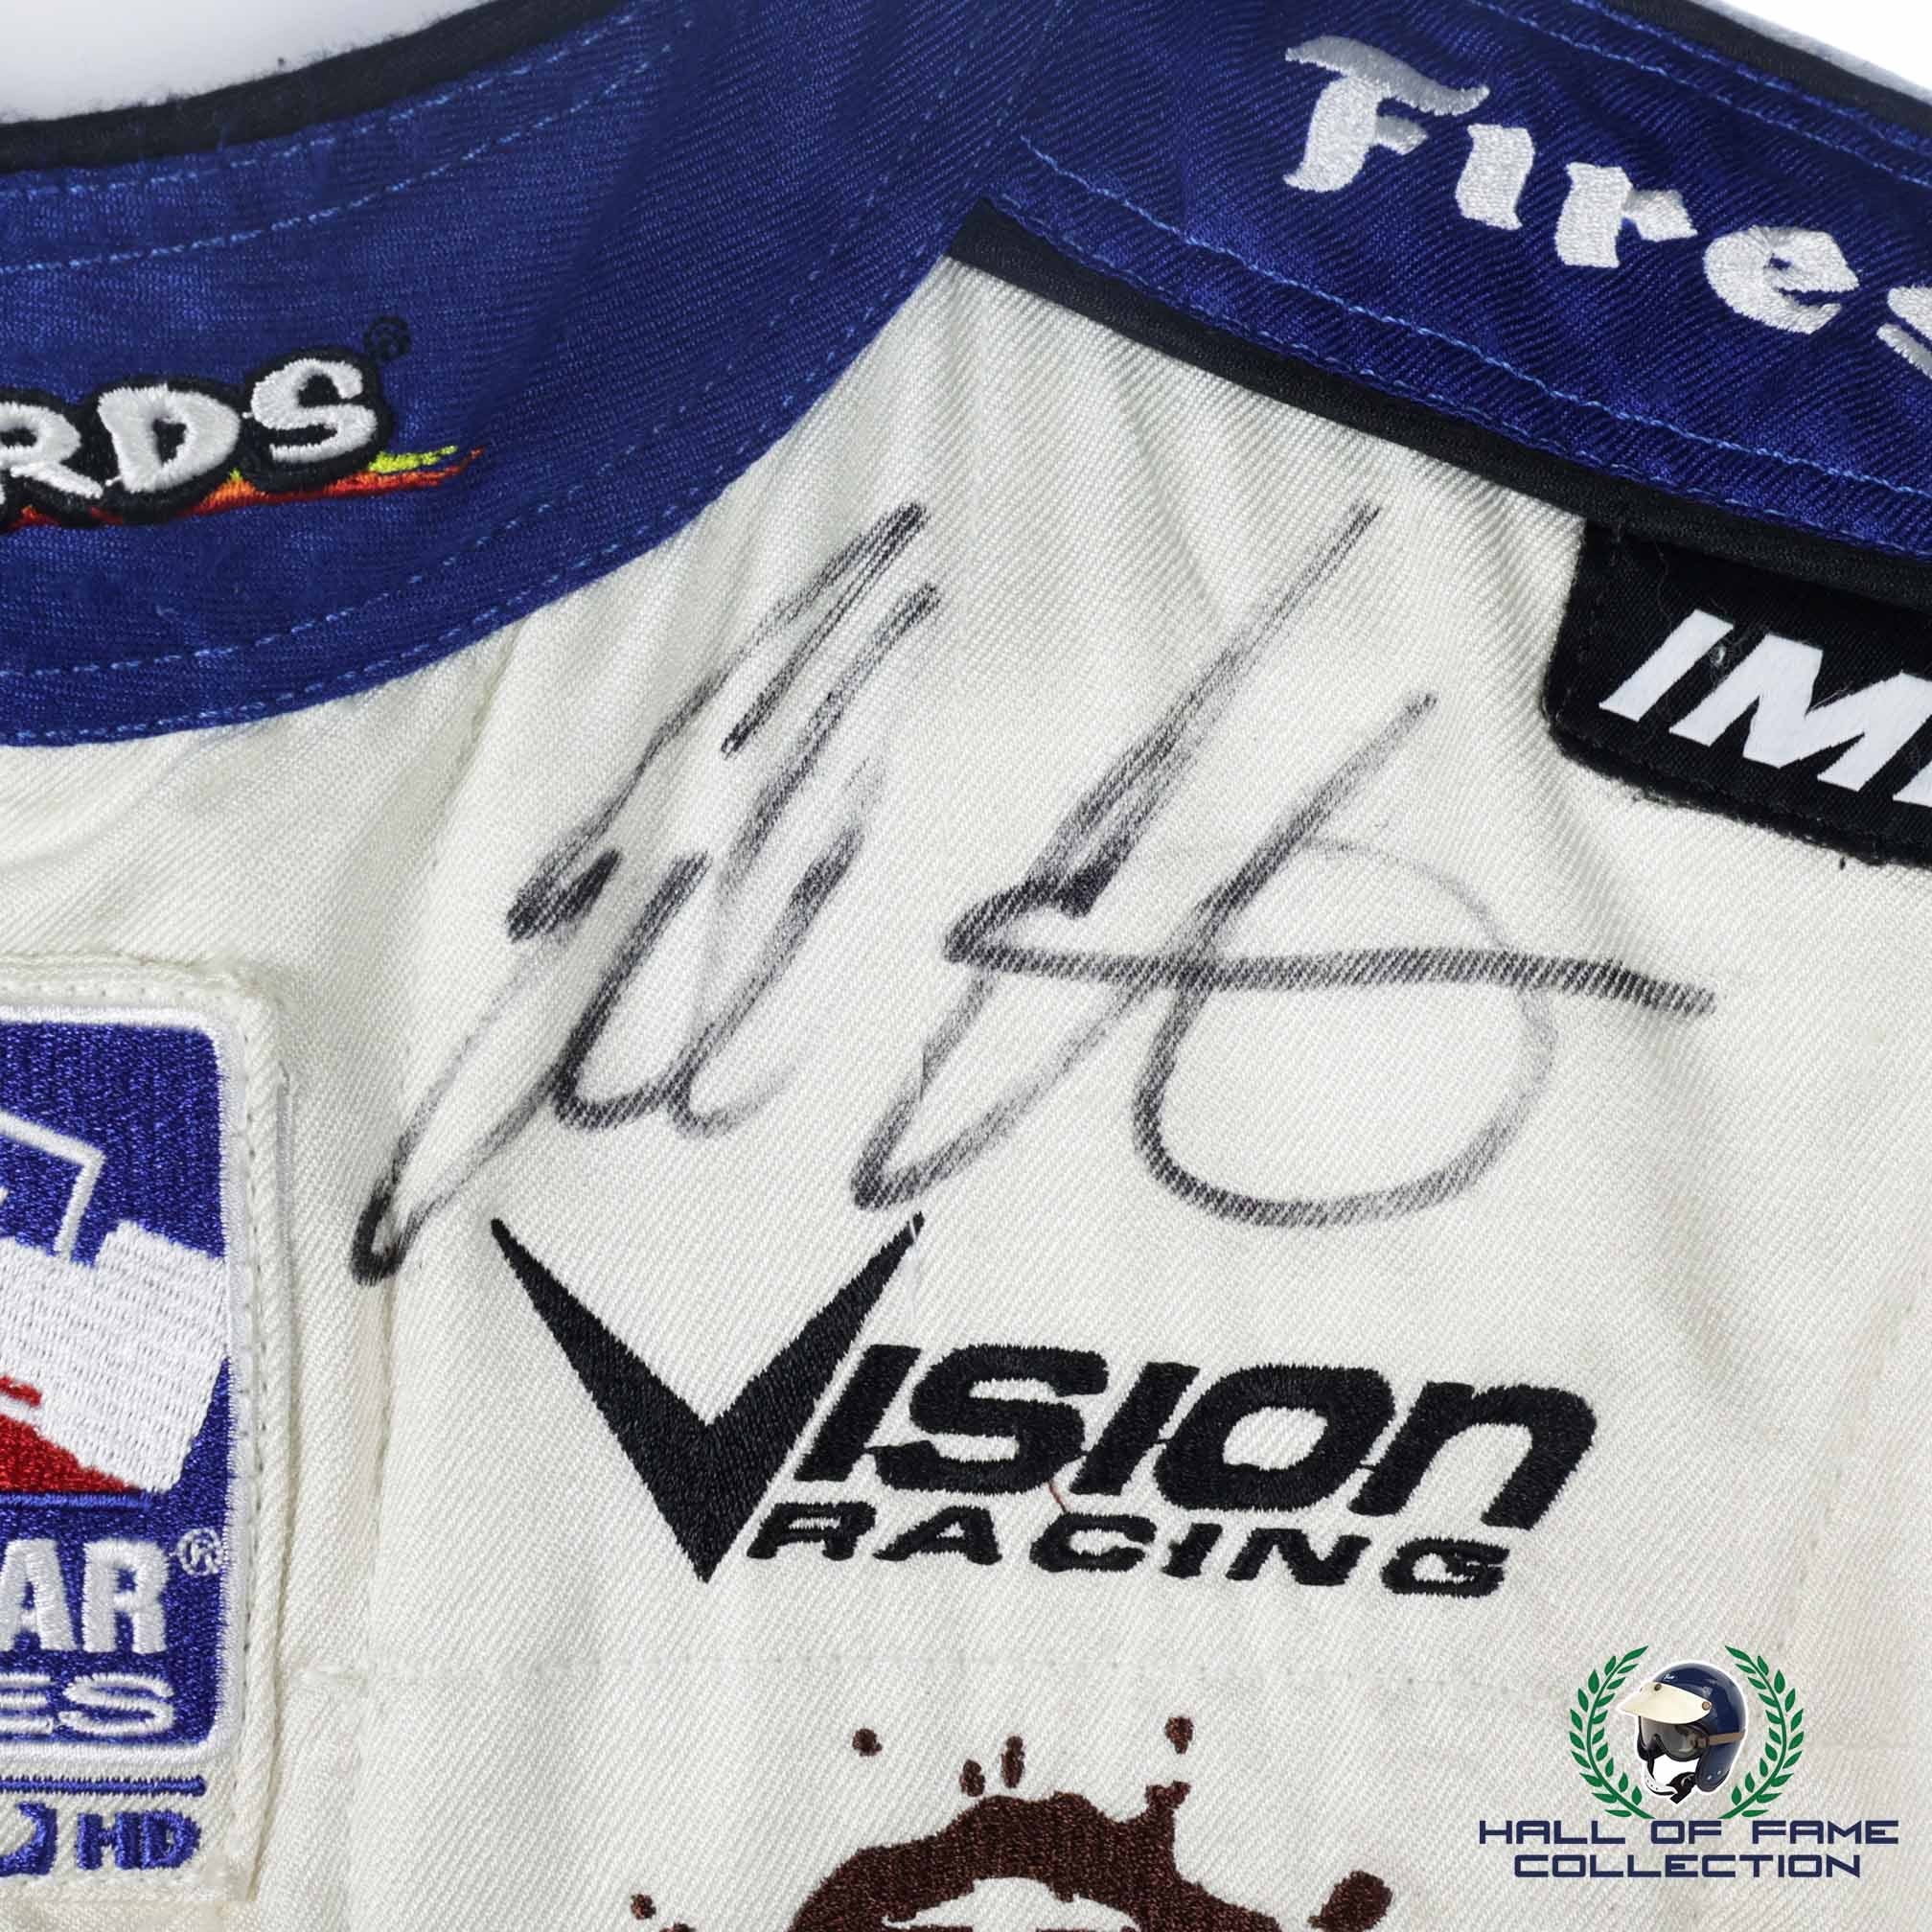 2008 Ed Carpenter Signed Race Used Menards IndyCar Suit